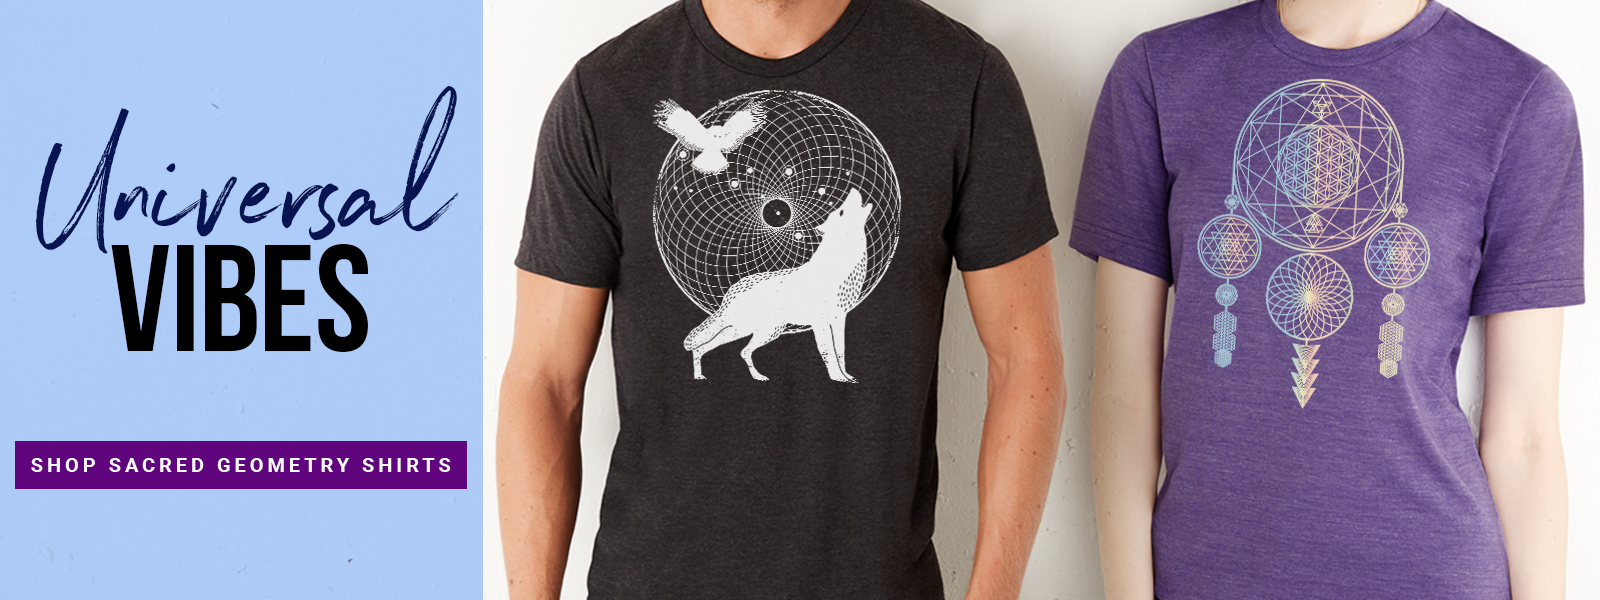 Vegan sacred geometry shirts - Vegan sacred geometry clothing by The Dharma Store